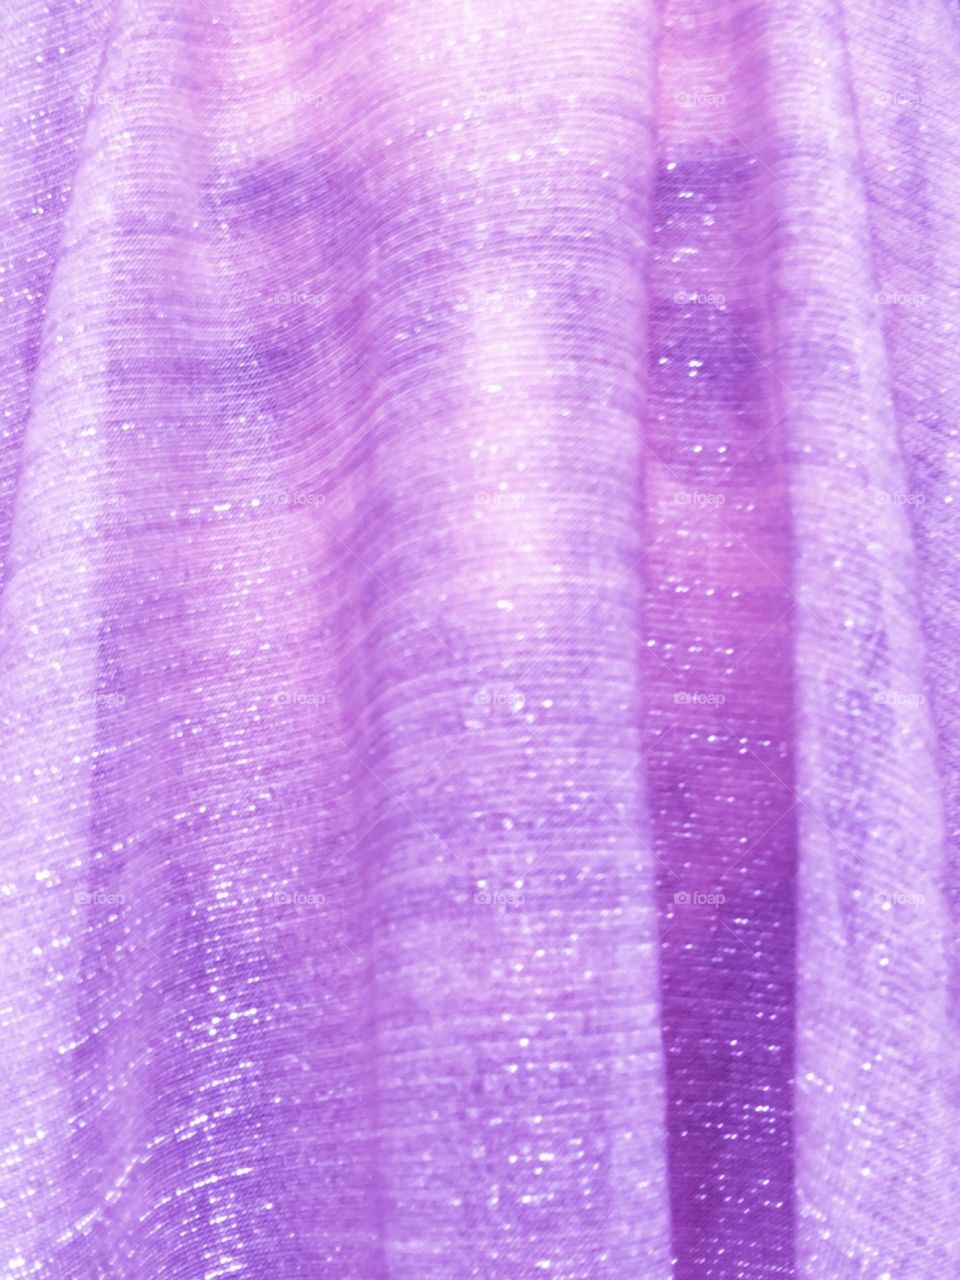 Beneath the purple veil